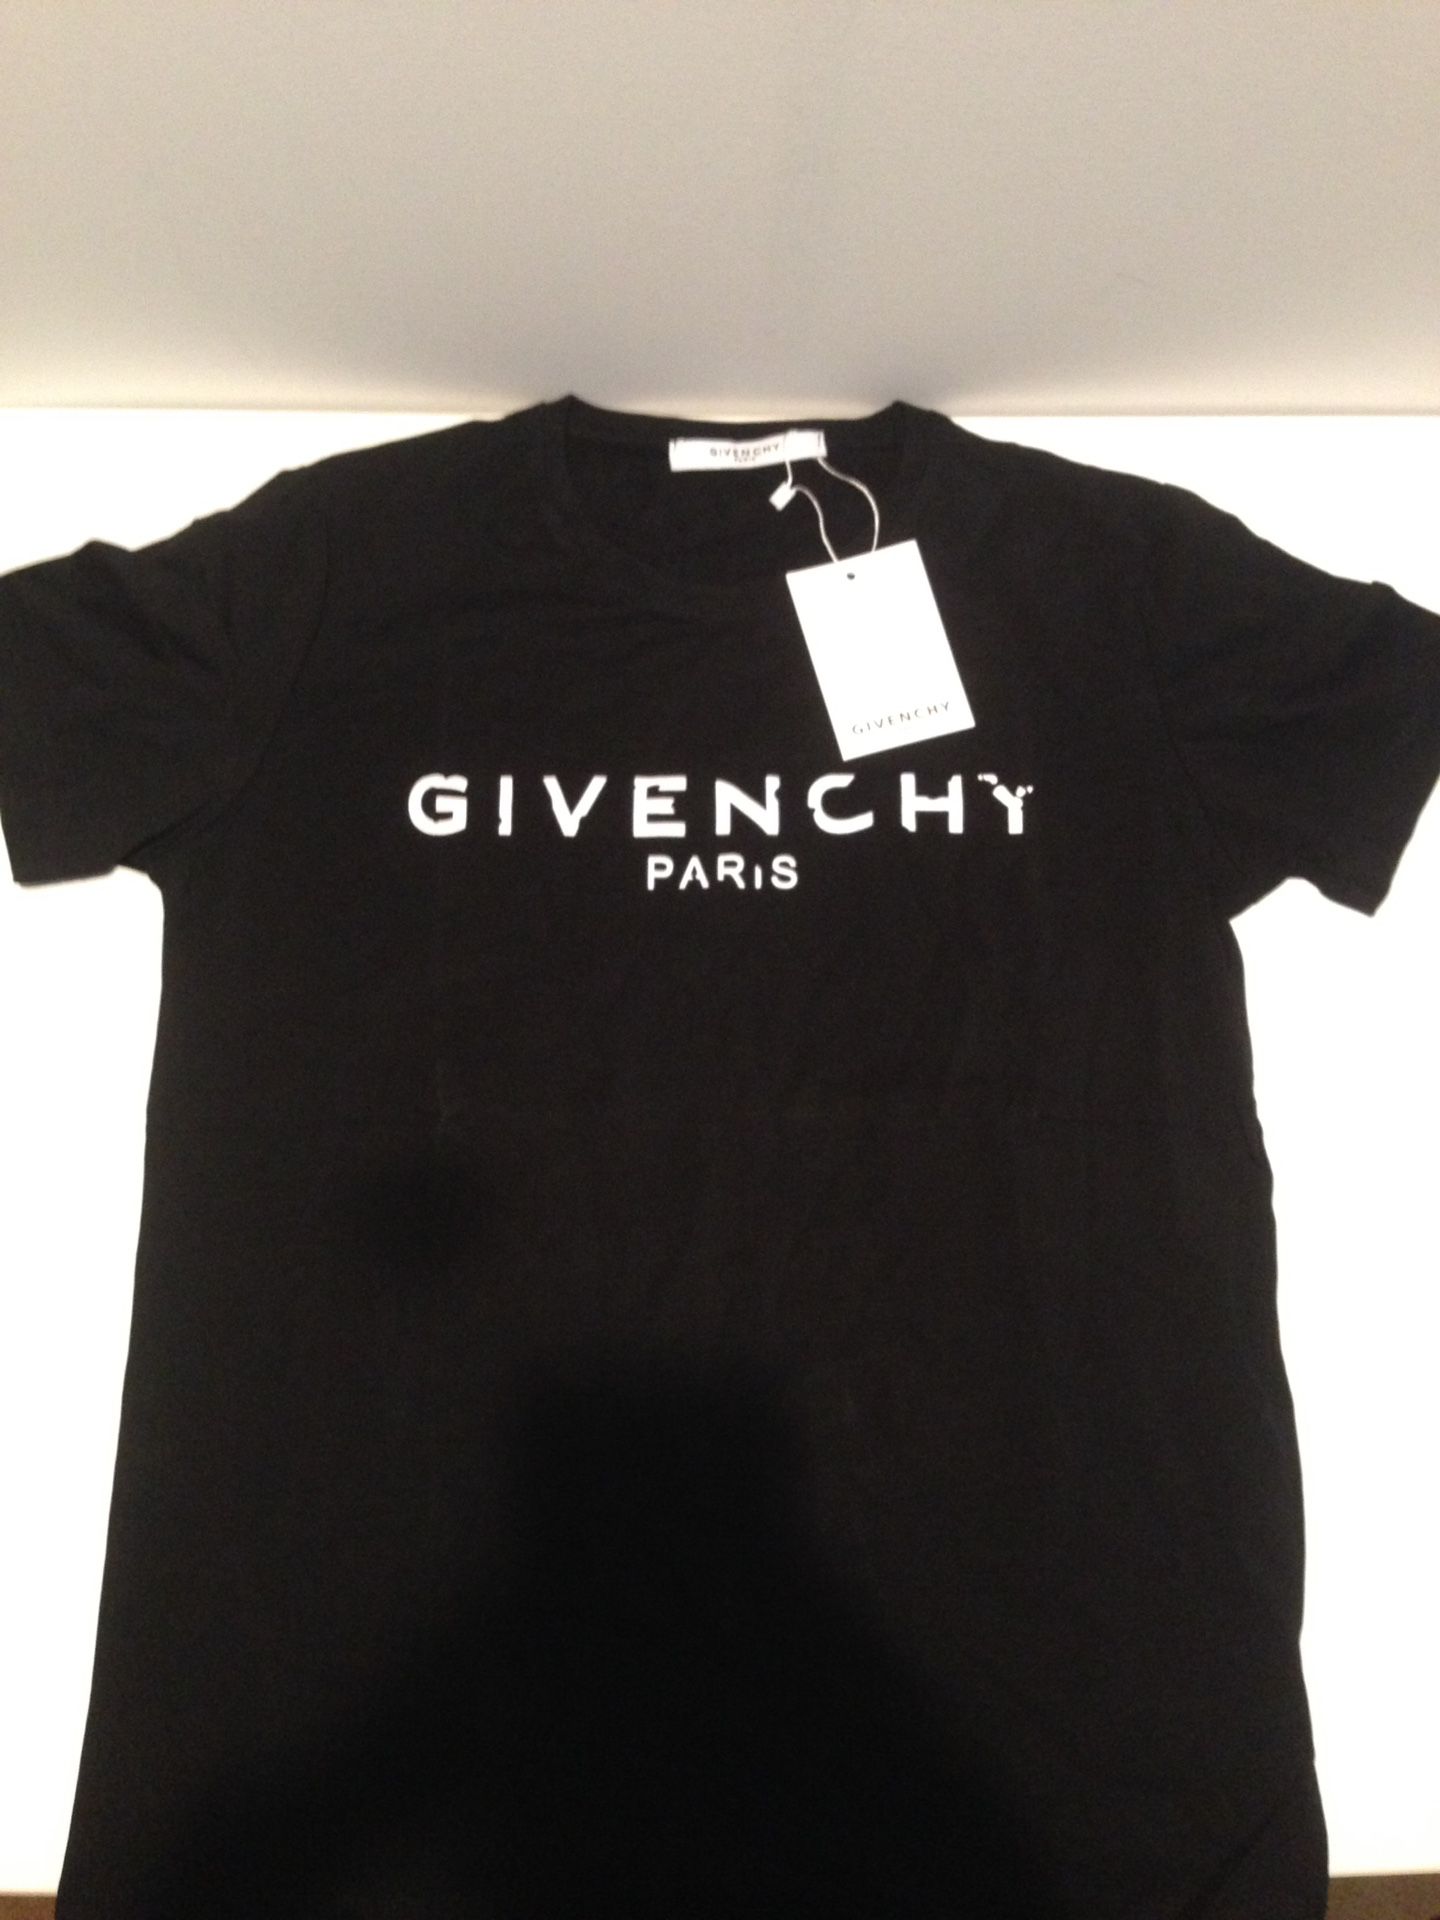 Givenchy shirt size small